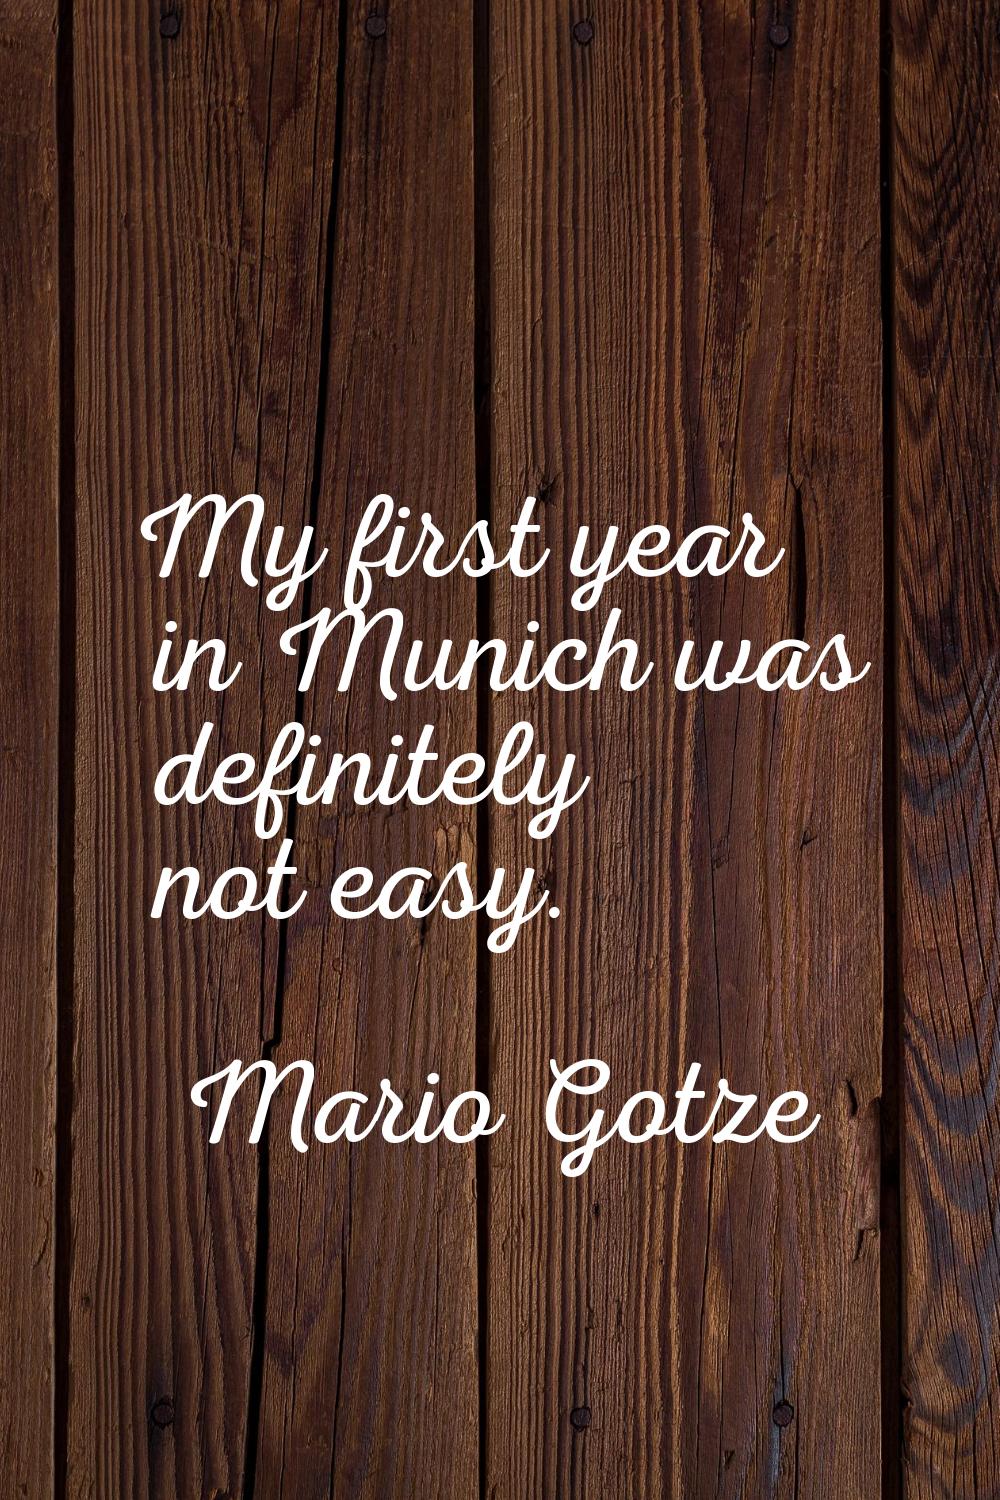 My first year in Munich was definitely not easy.